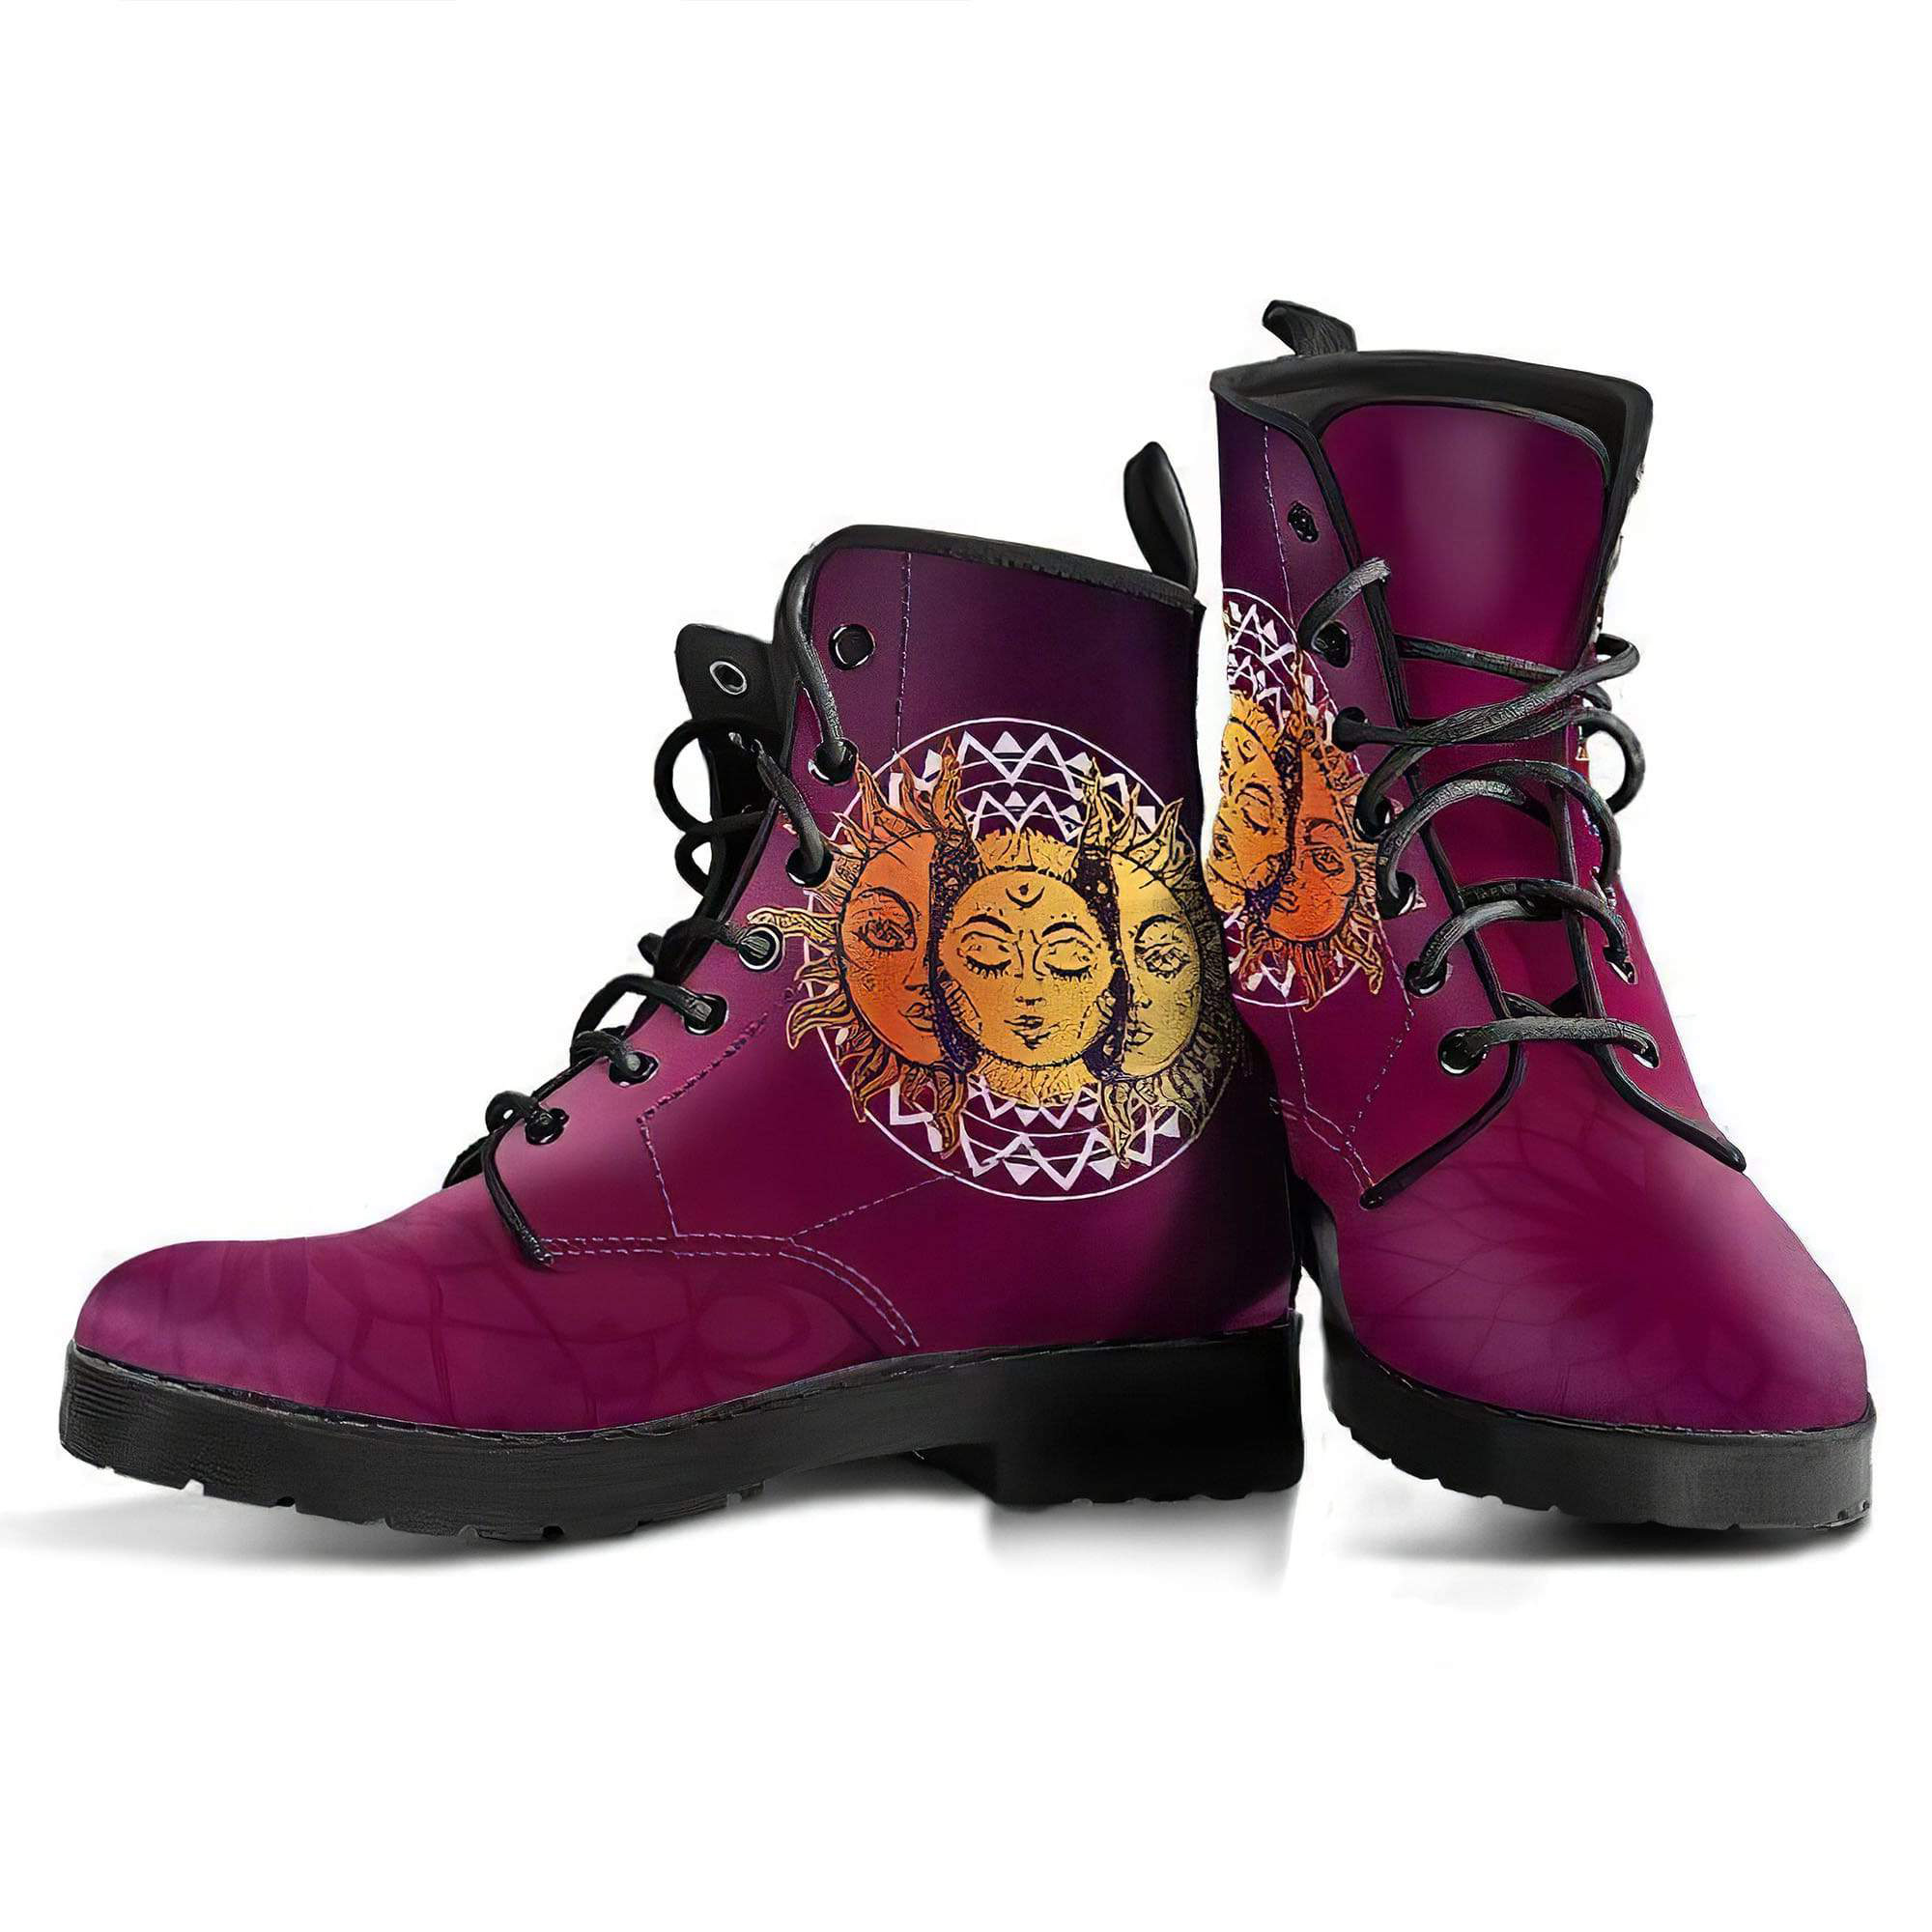 sun-moon-women-s-boots-vegan-friendly-leather-women-s-leather-boots-12051961905213.jpg